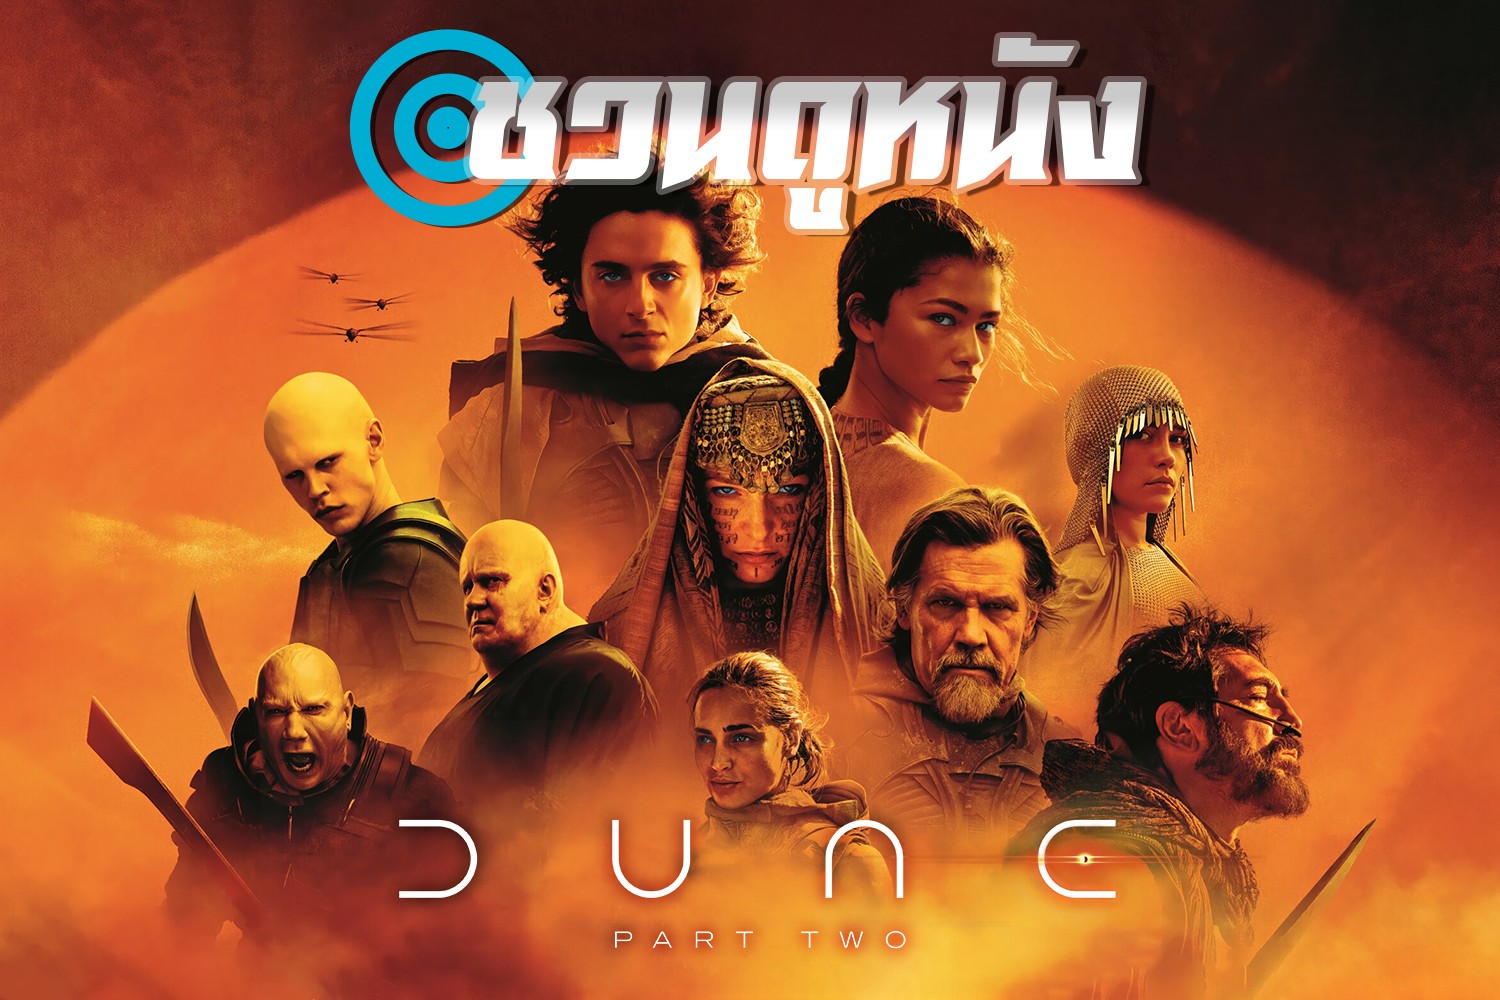 Dune: Part Two ภาพยนตร์ที่คู่ควรแก่การดูใน IMAX